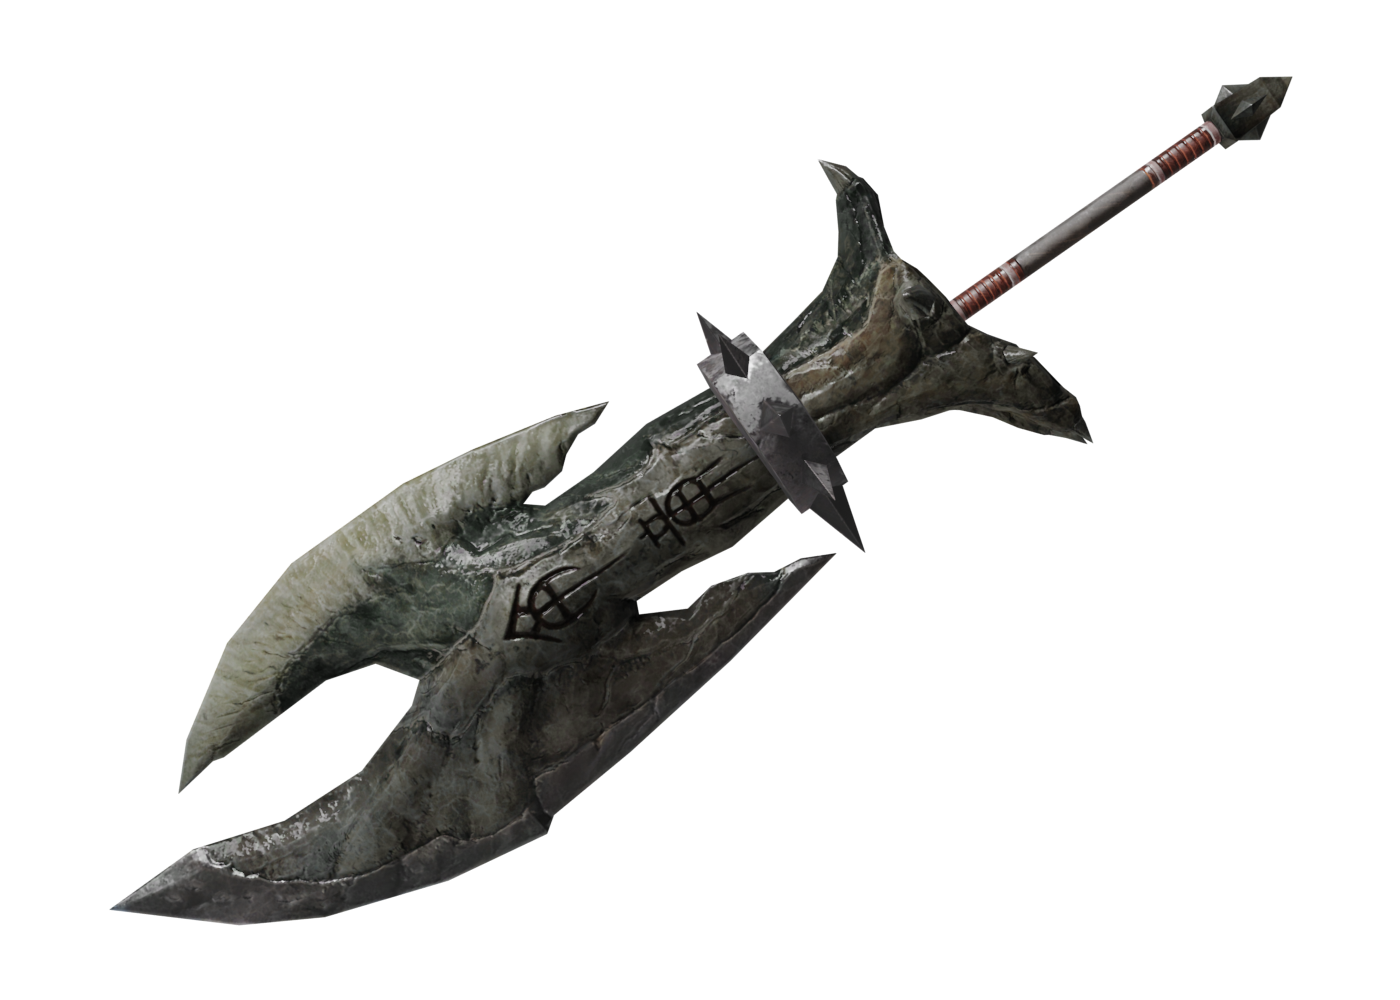 Monster Hunter Black Diablos Armor (Dual Sword) by Gegopat on DeviantArt